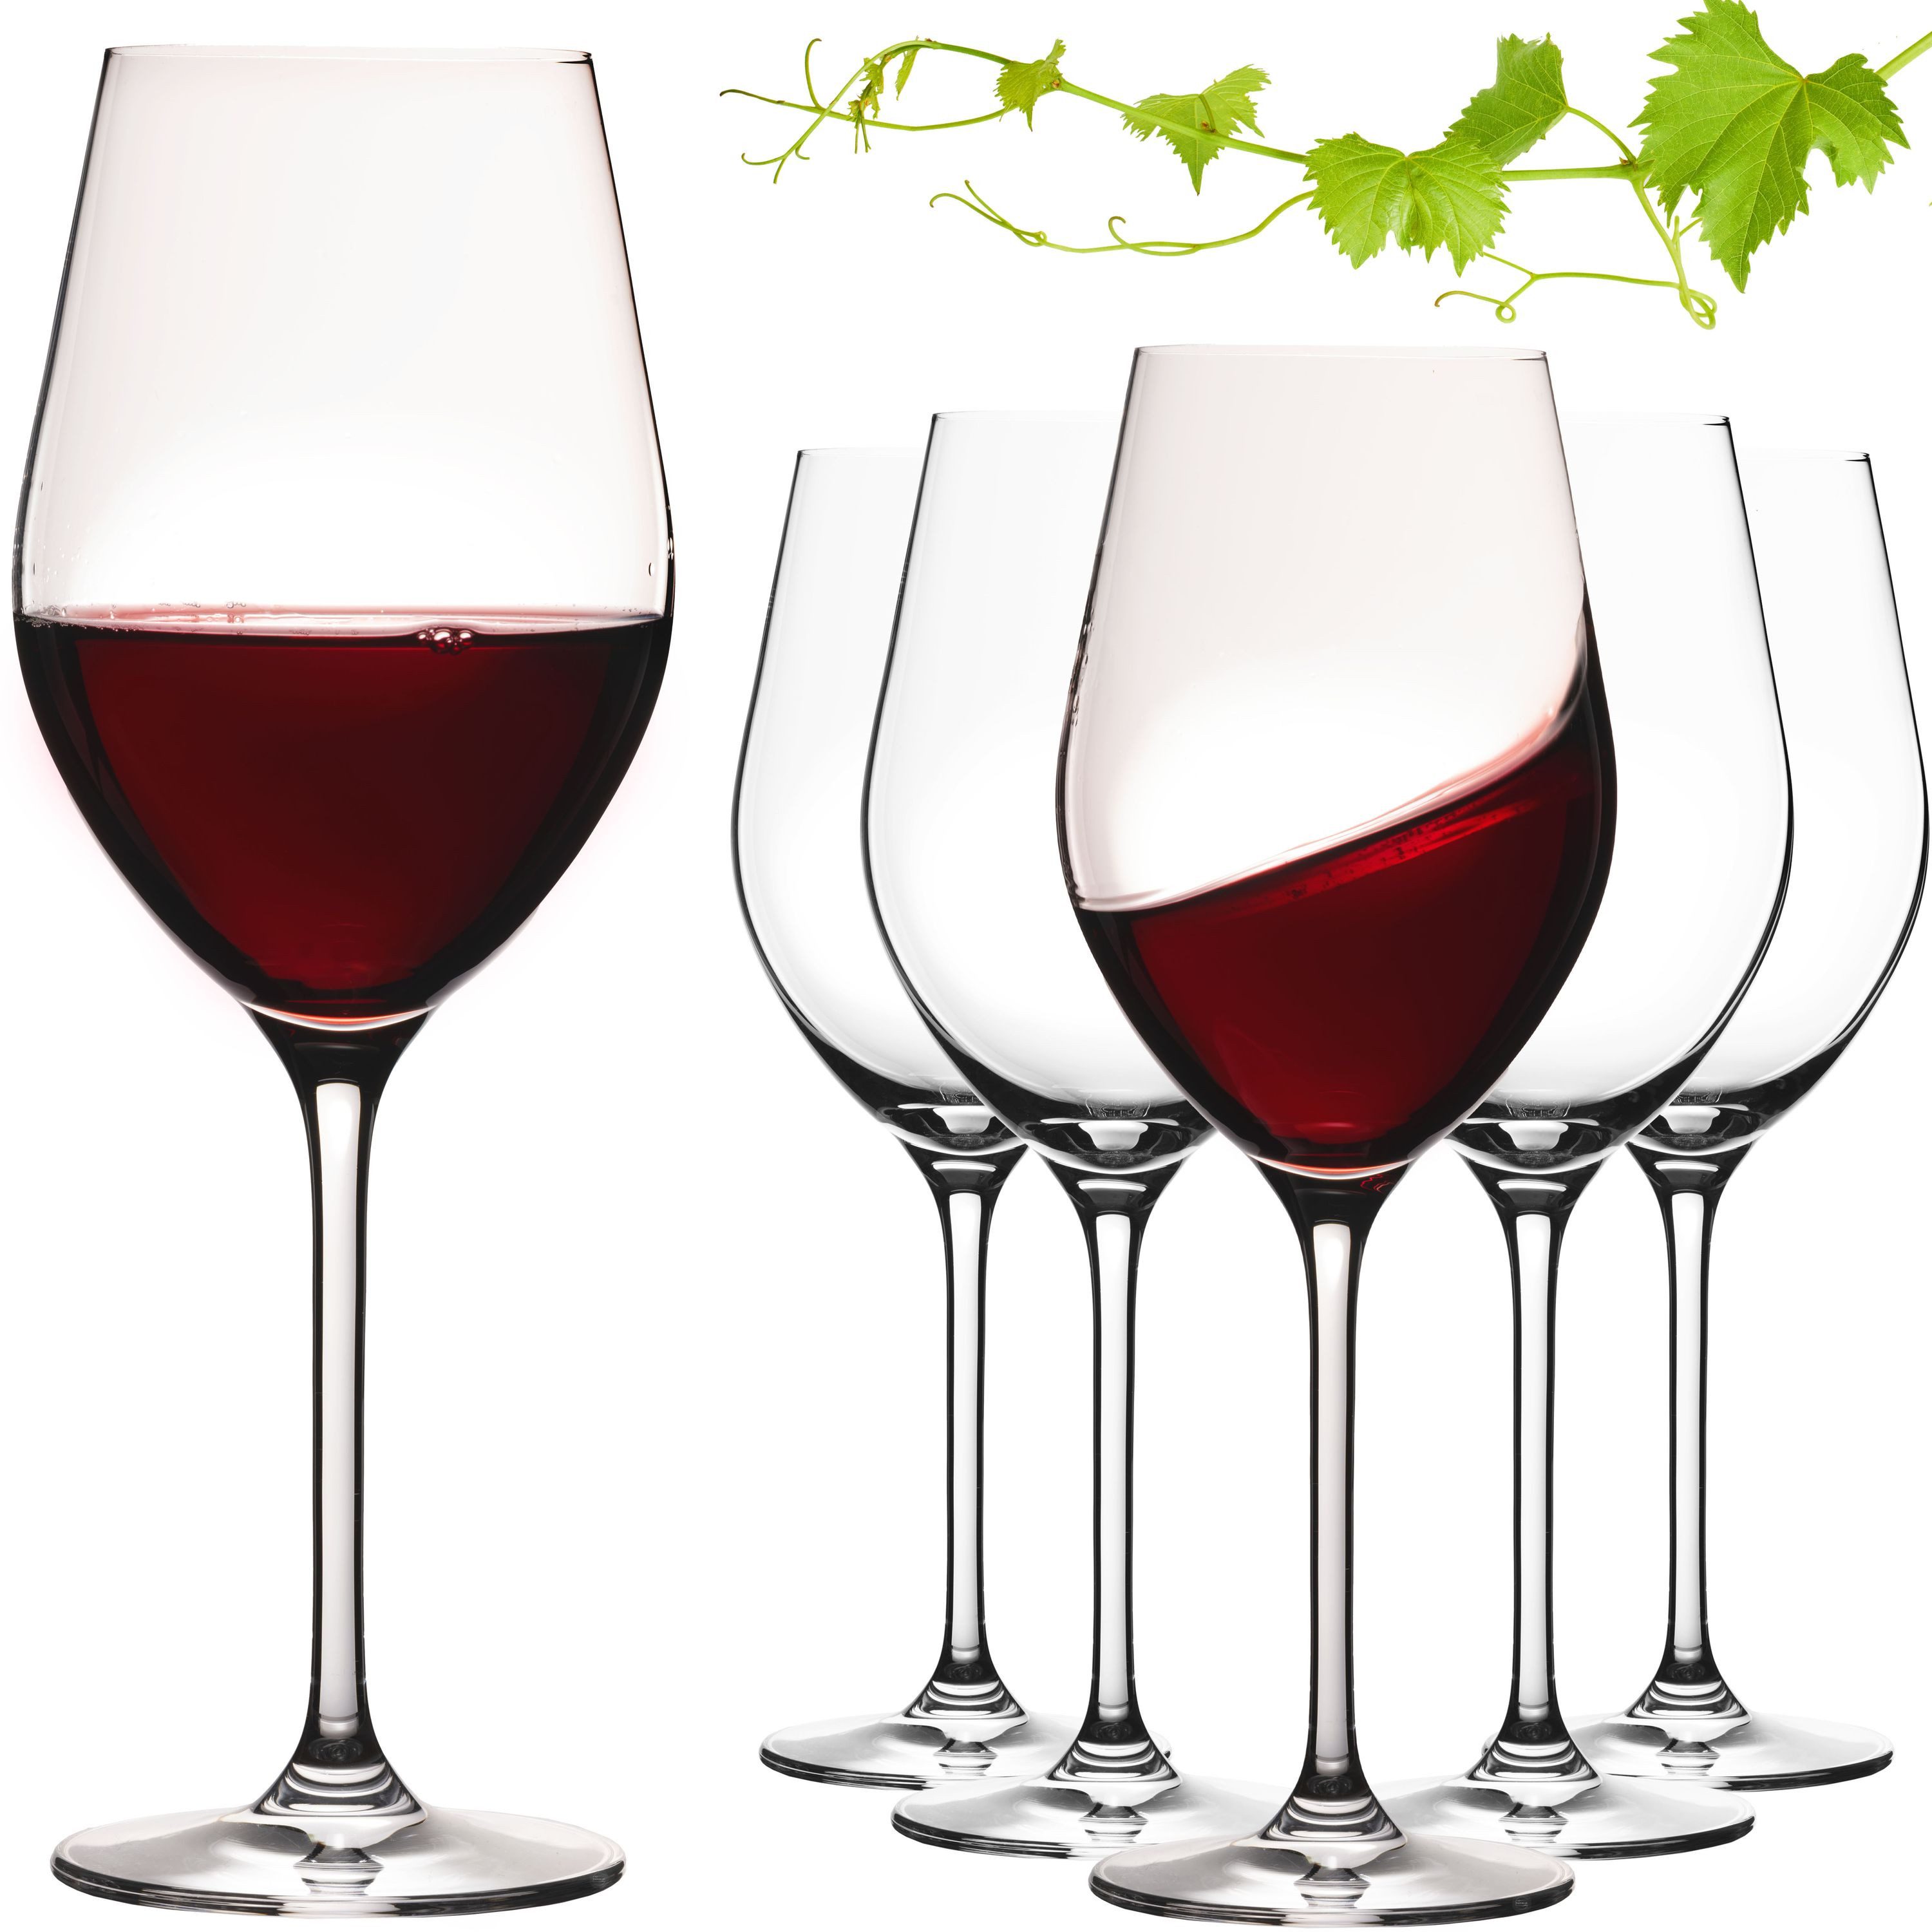 IMPERIAL glass Weinglas Rotweingläser 300ml Set 6-Teilig "Sydney", Crystalline Glas, Bordeauxgläser aus Crystalline Glas Weinglas Spülmaschinenfest